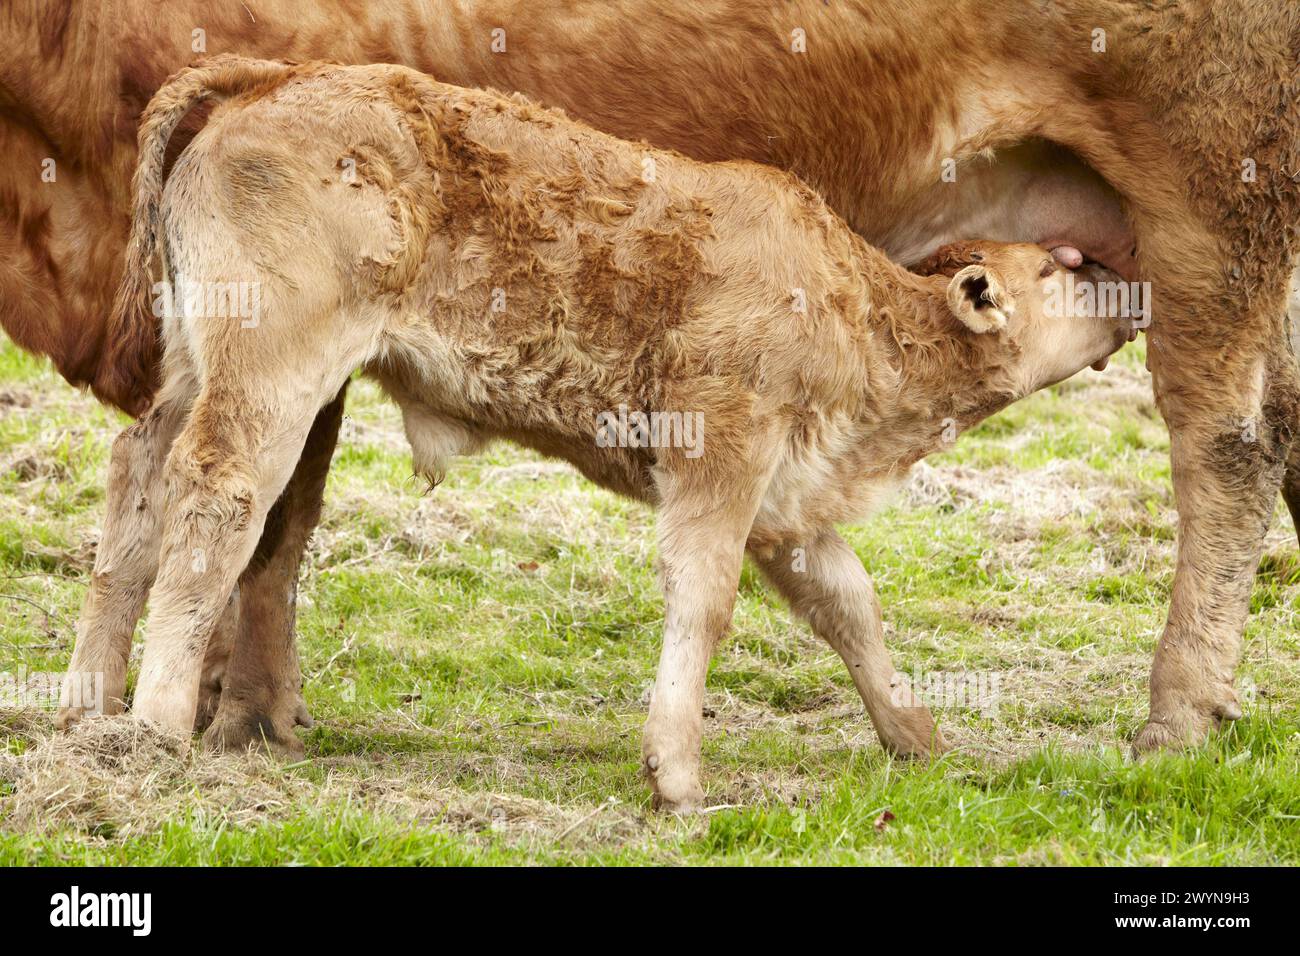 Limousin cattle, Beizama, Gipuzkoa, Basque Country, Spain. Stock Photo